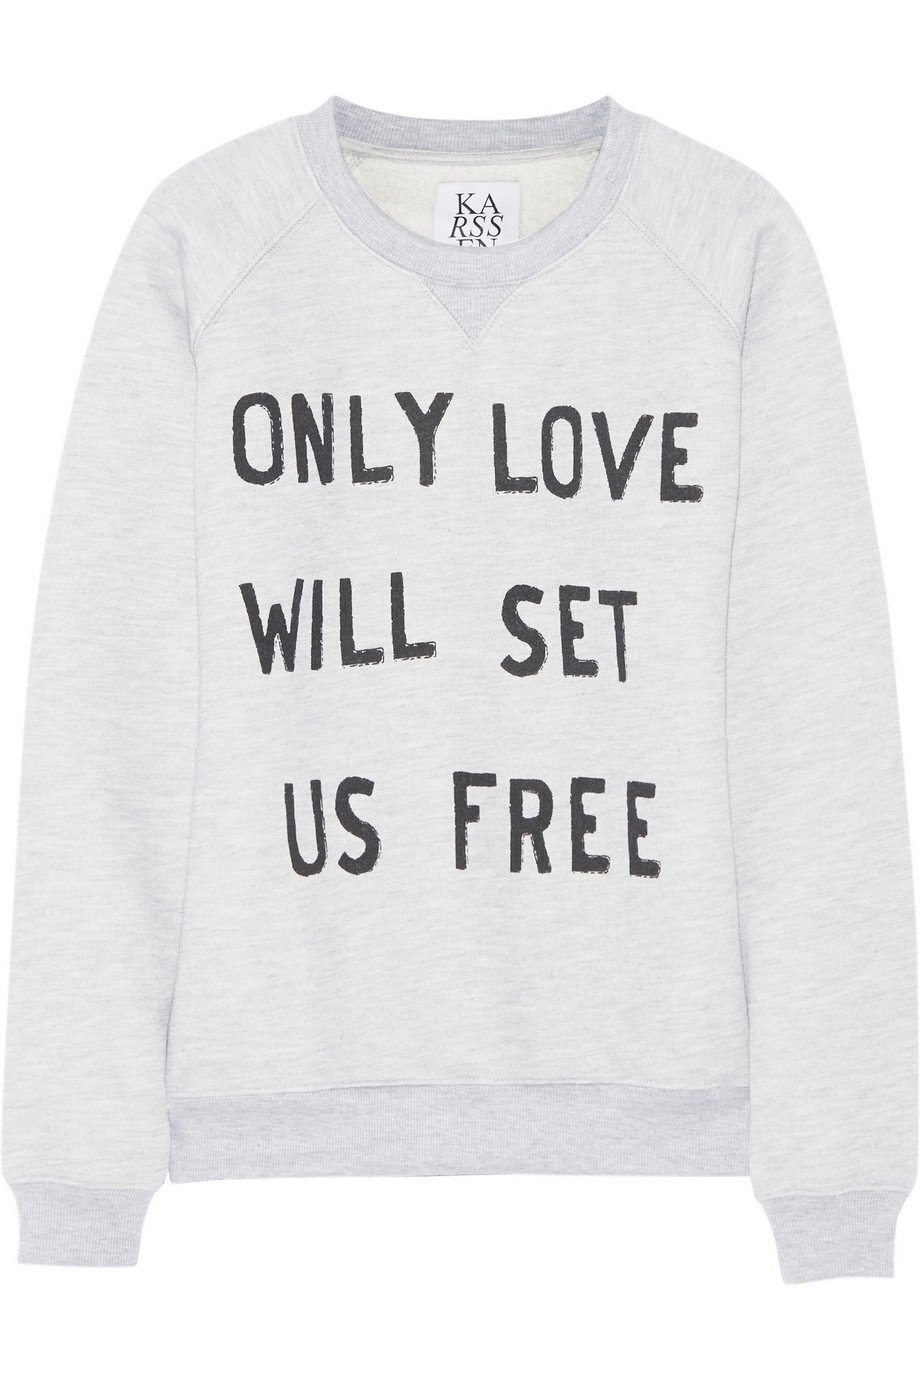 zoe-karssen-gray-only-love-will-set-us-free-jersey-sweatshirt-product-1-21435544-3-378670240-normal.jpeg